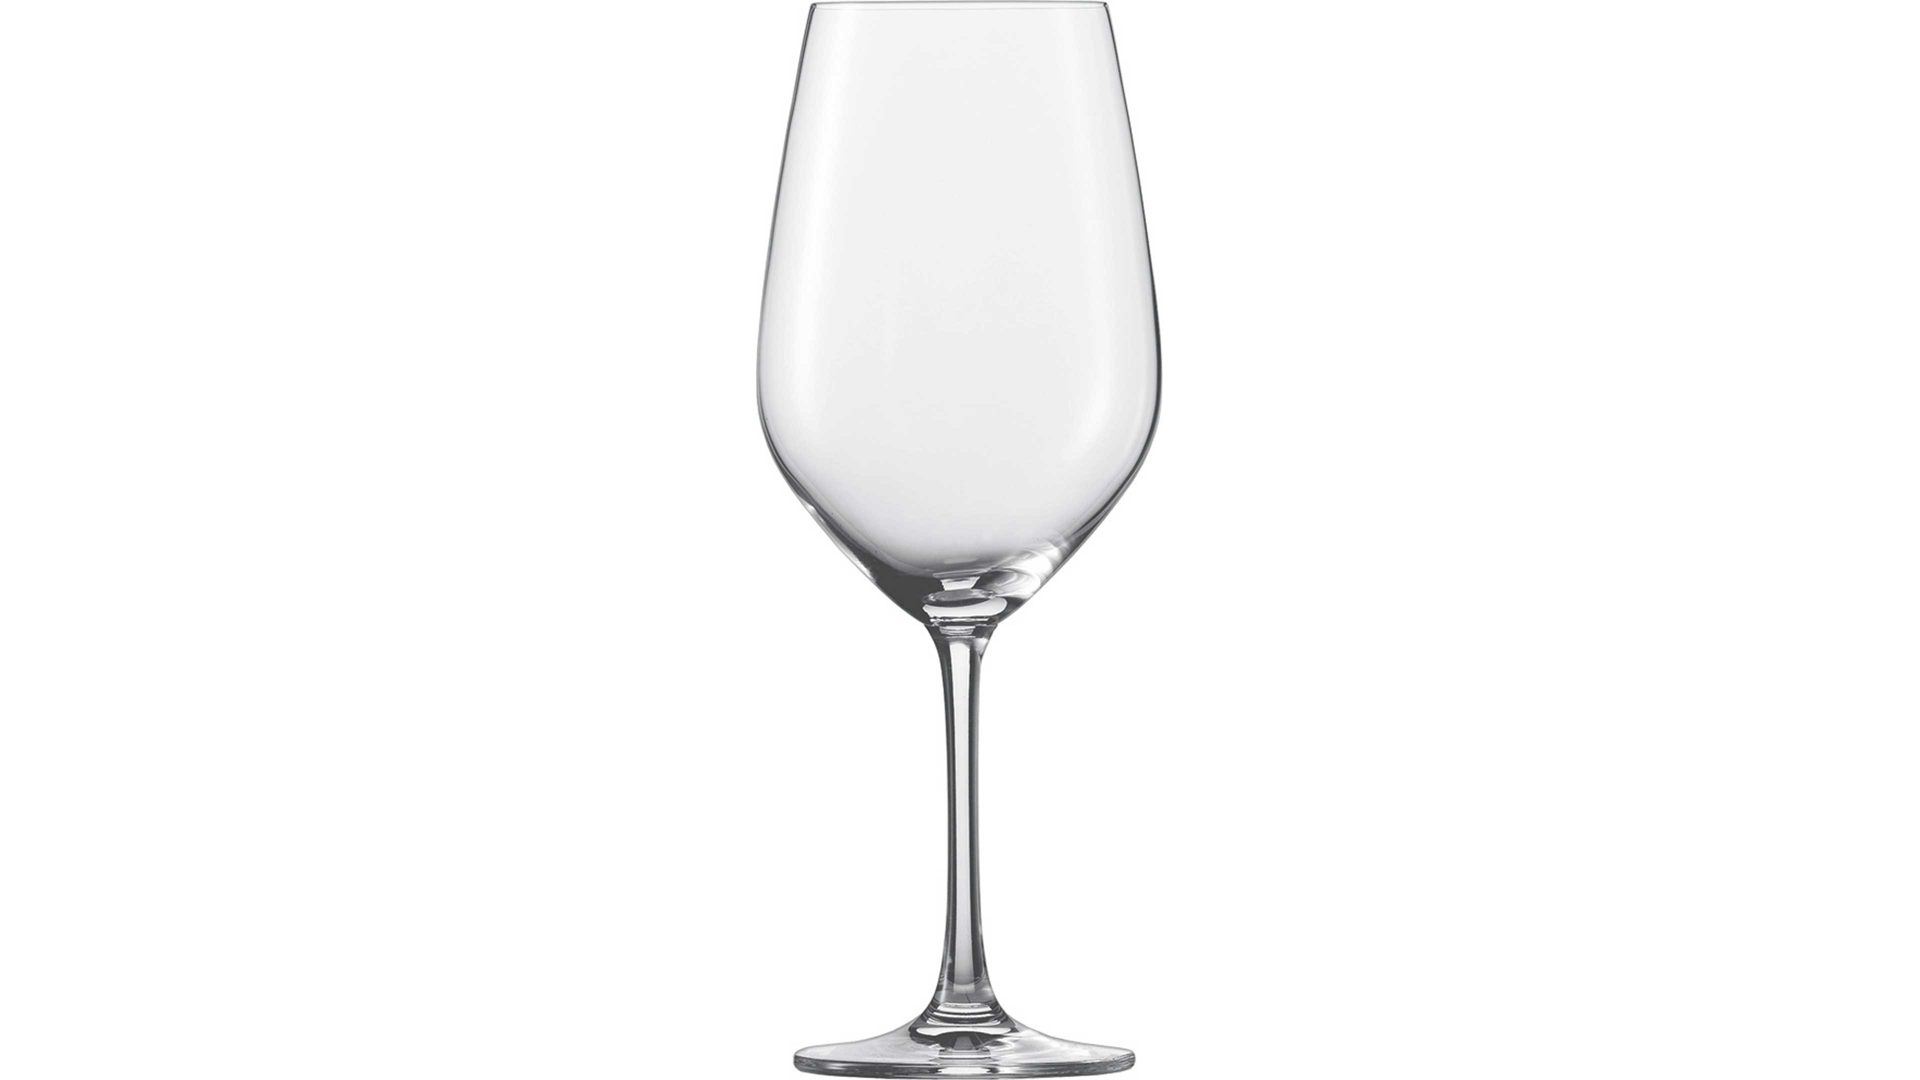 Rotweinglas Schott zwiesel aus Glas in Transparent SCHOTT ZWIESEL Rotweinglas Forte Tritan®-Kristallglas – ca. 530 ml, 6-teilig